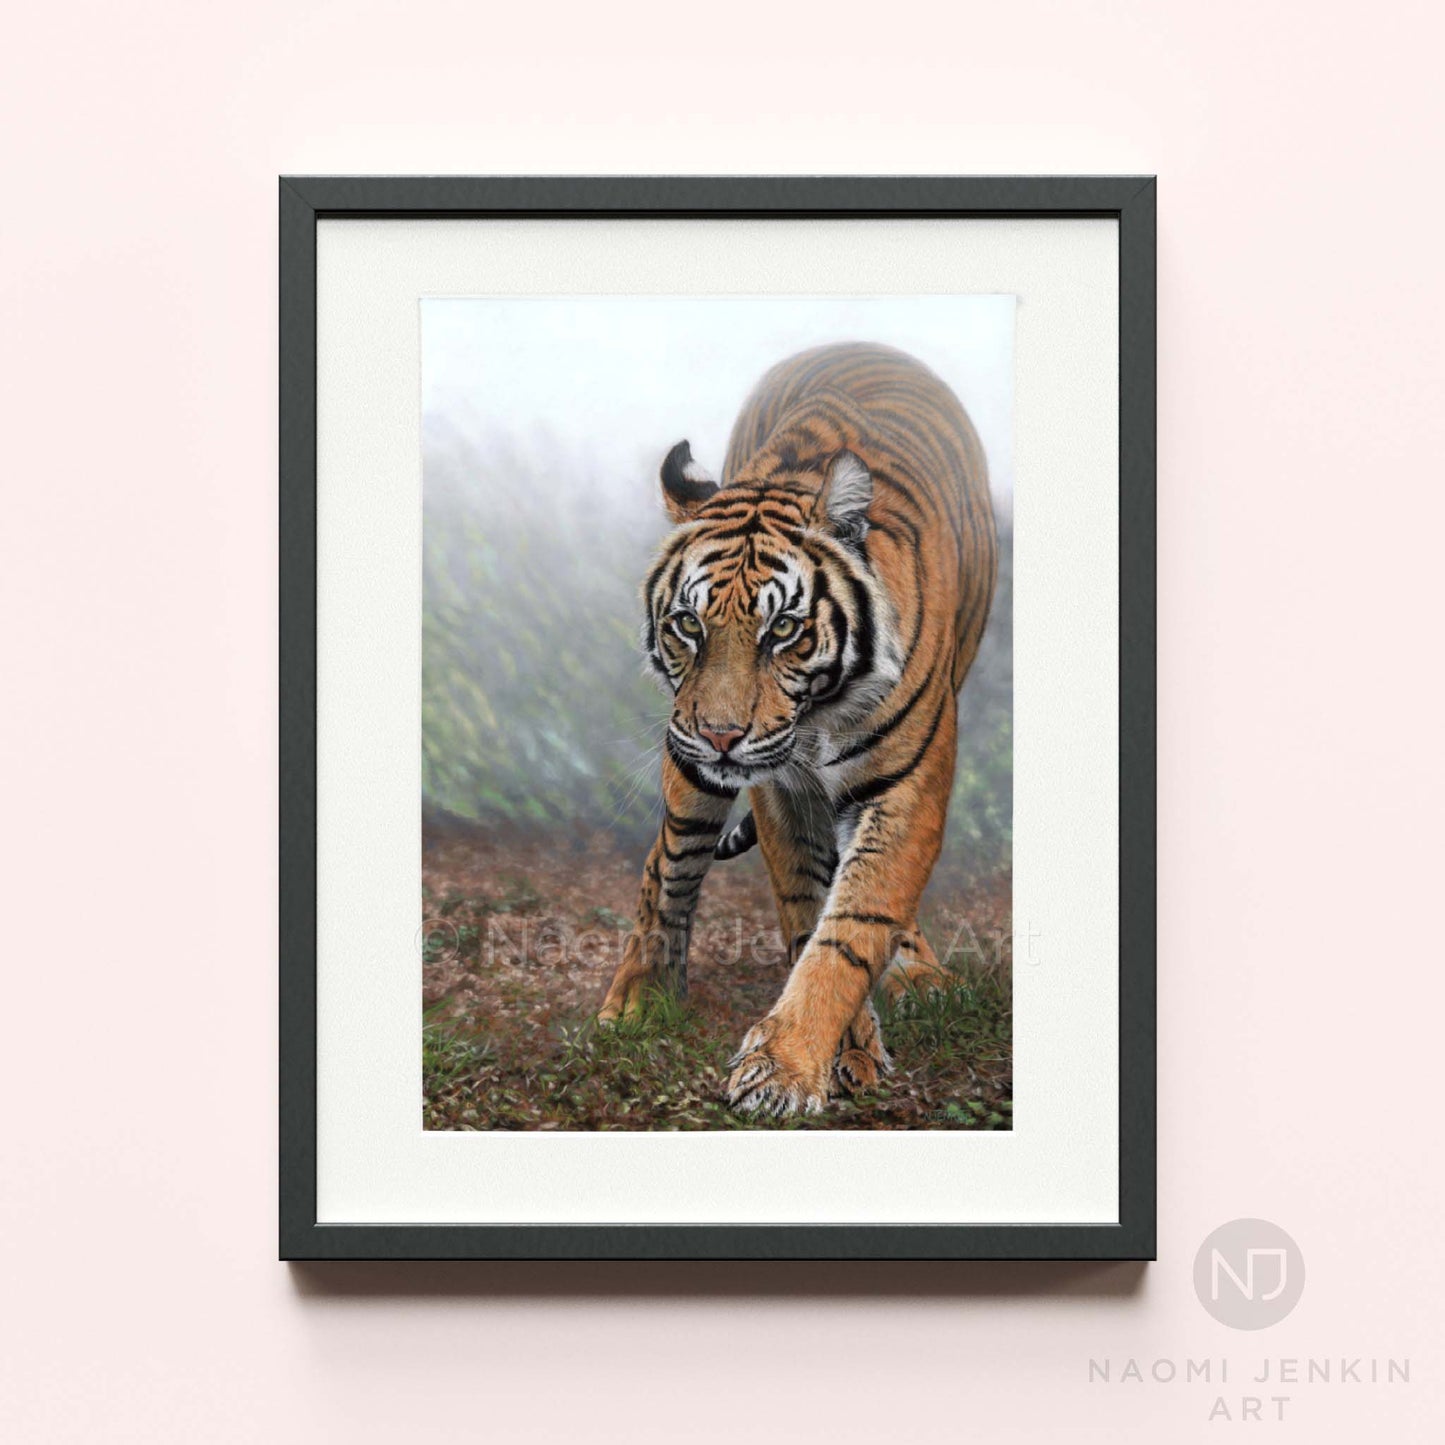 Framed tiger art print "Stealth" by wildlife artist Naomi Jenkin Art.